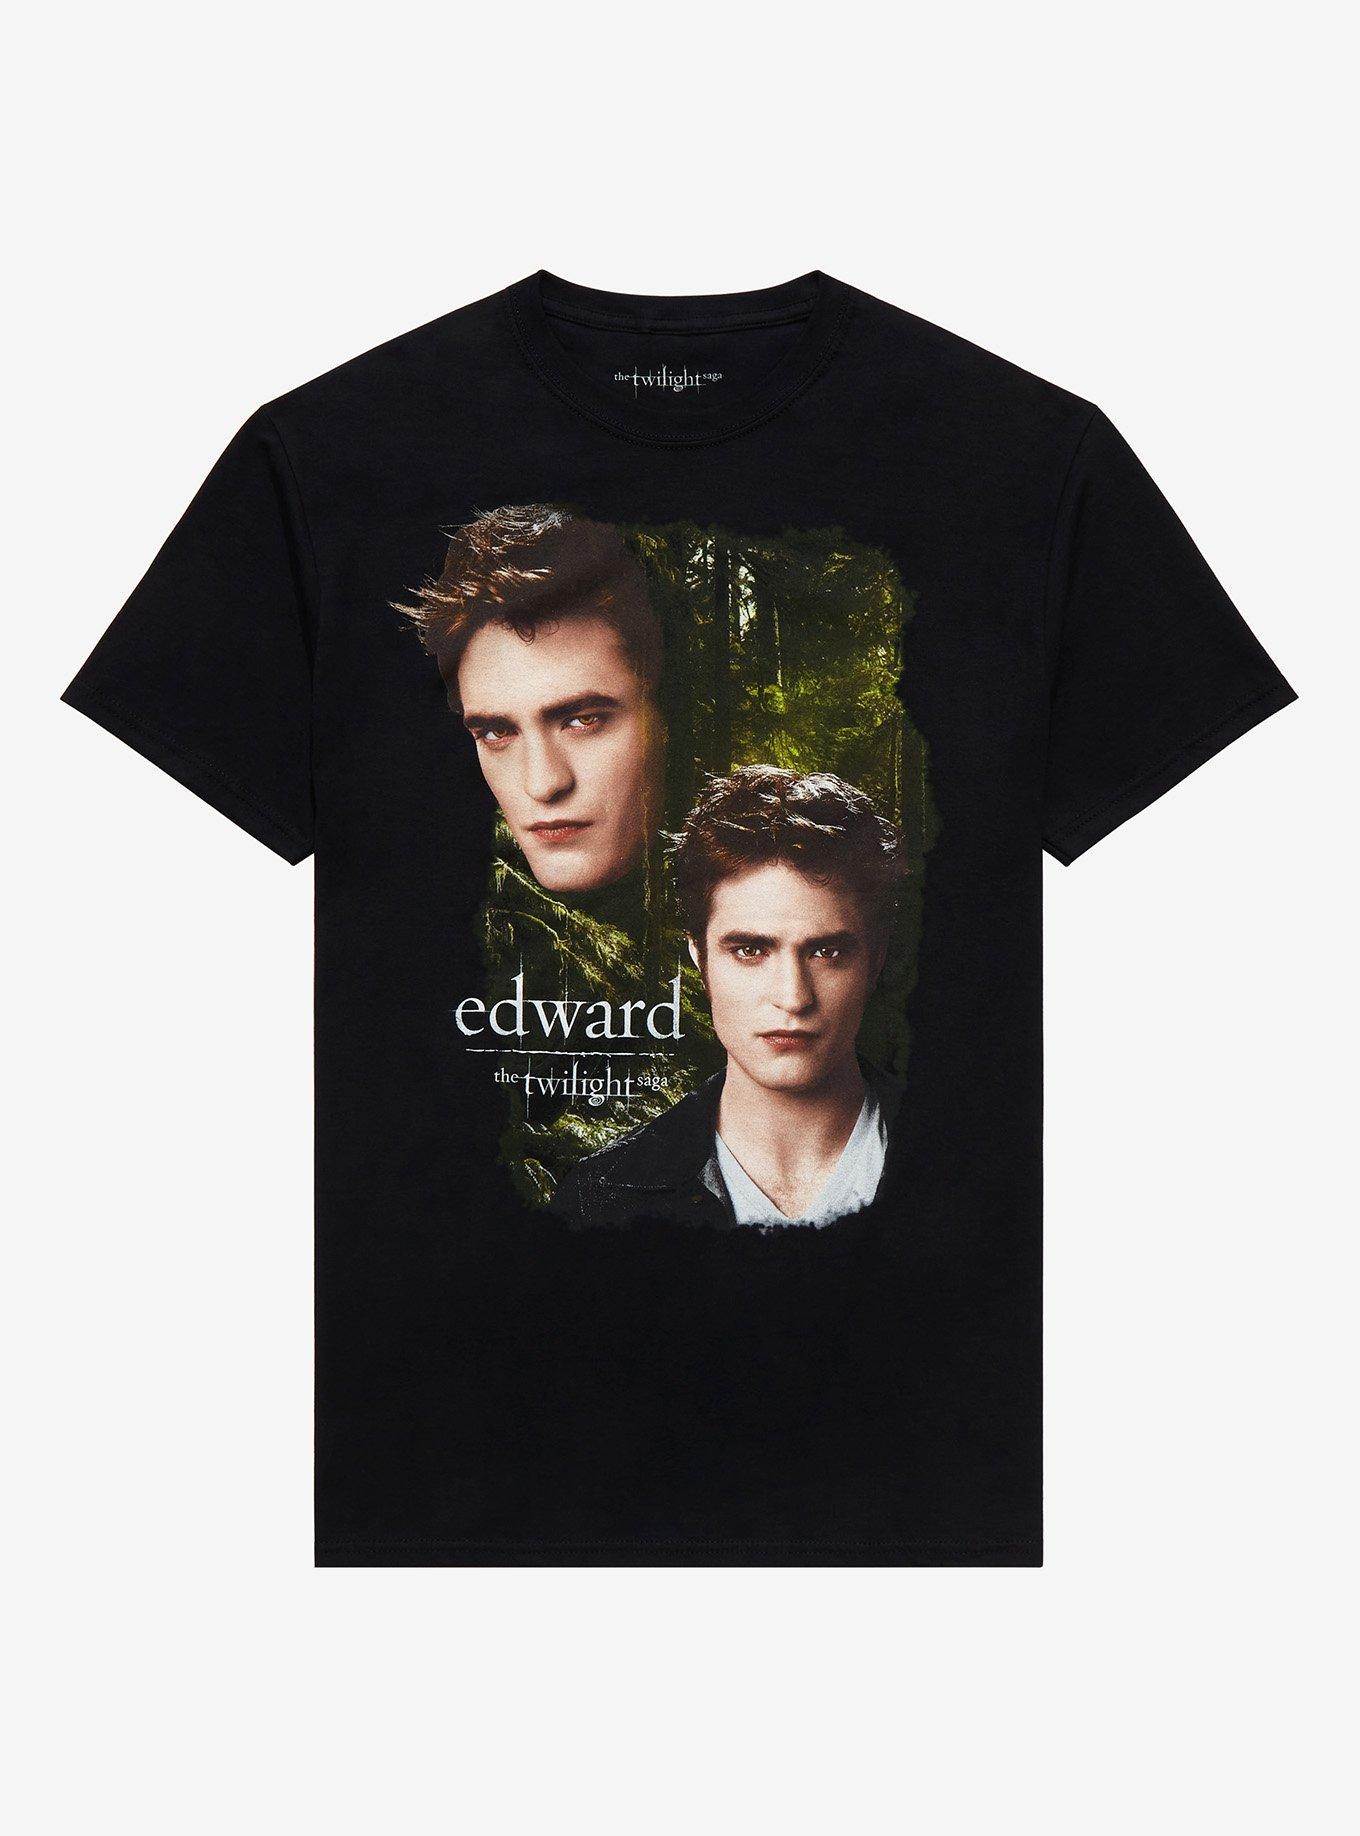 The Twilight Saga Edward T-Shirt | Hot Topic